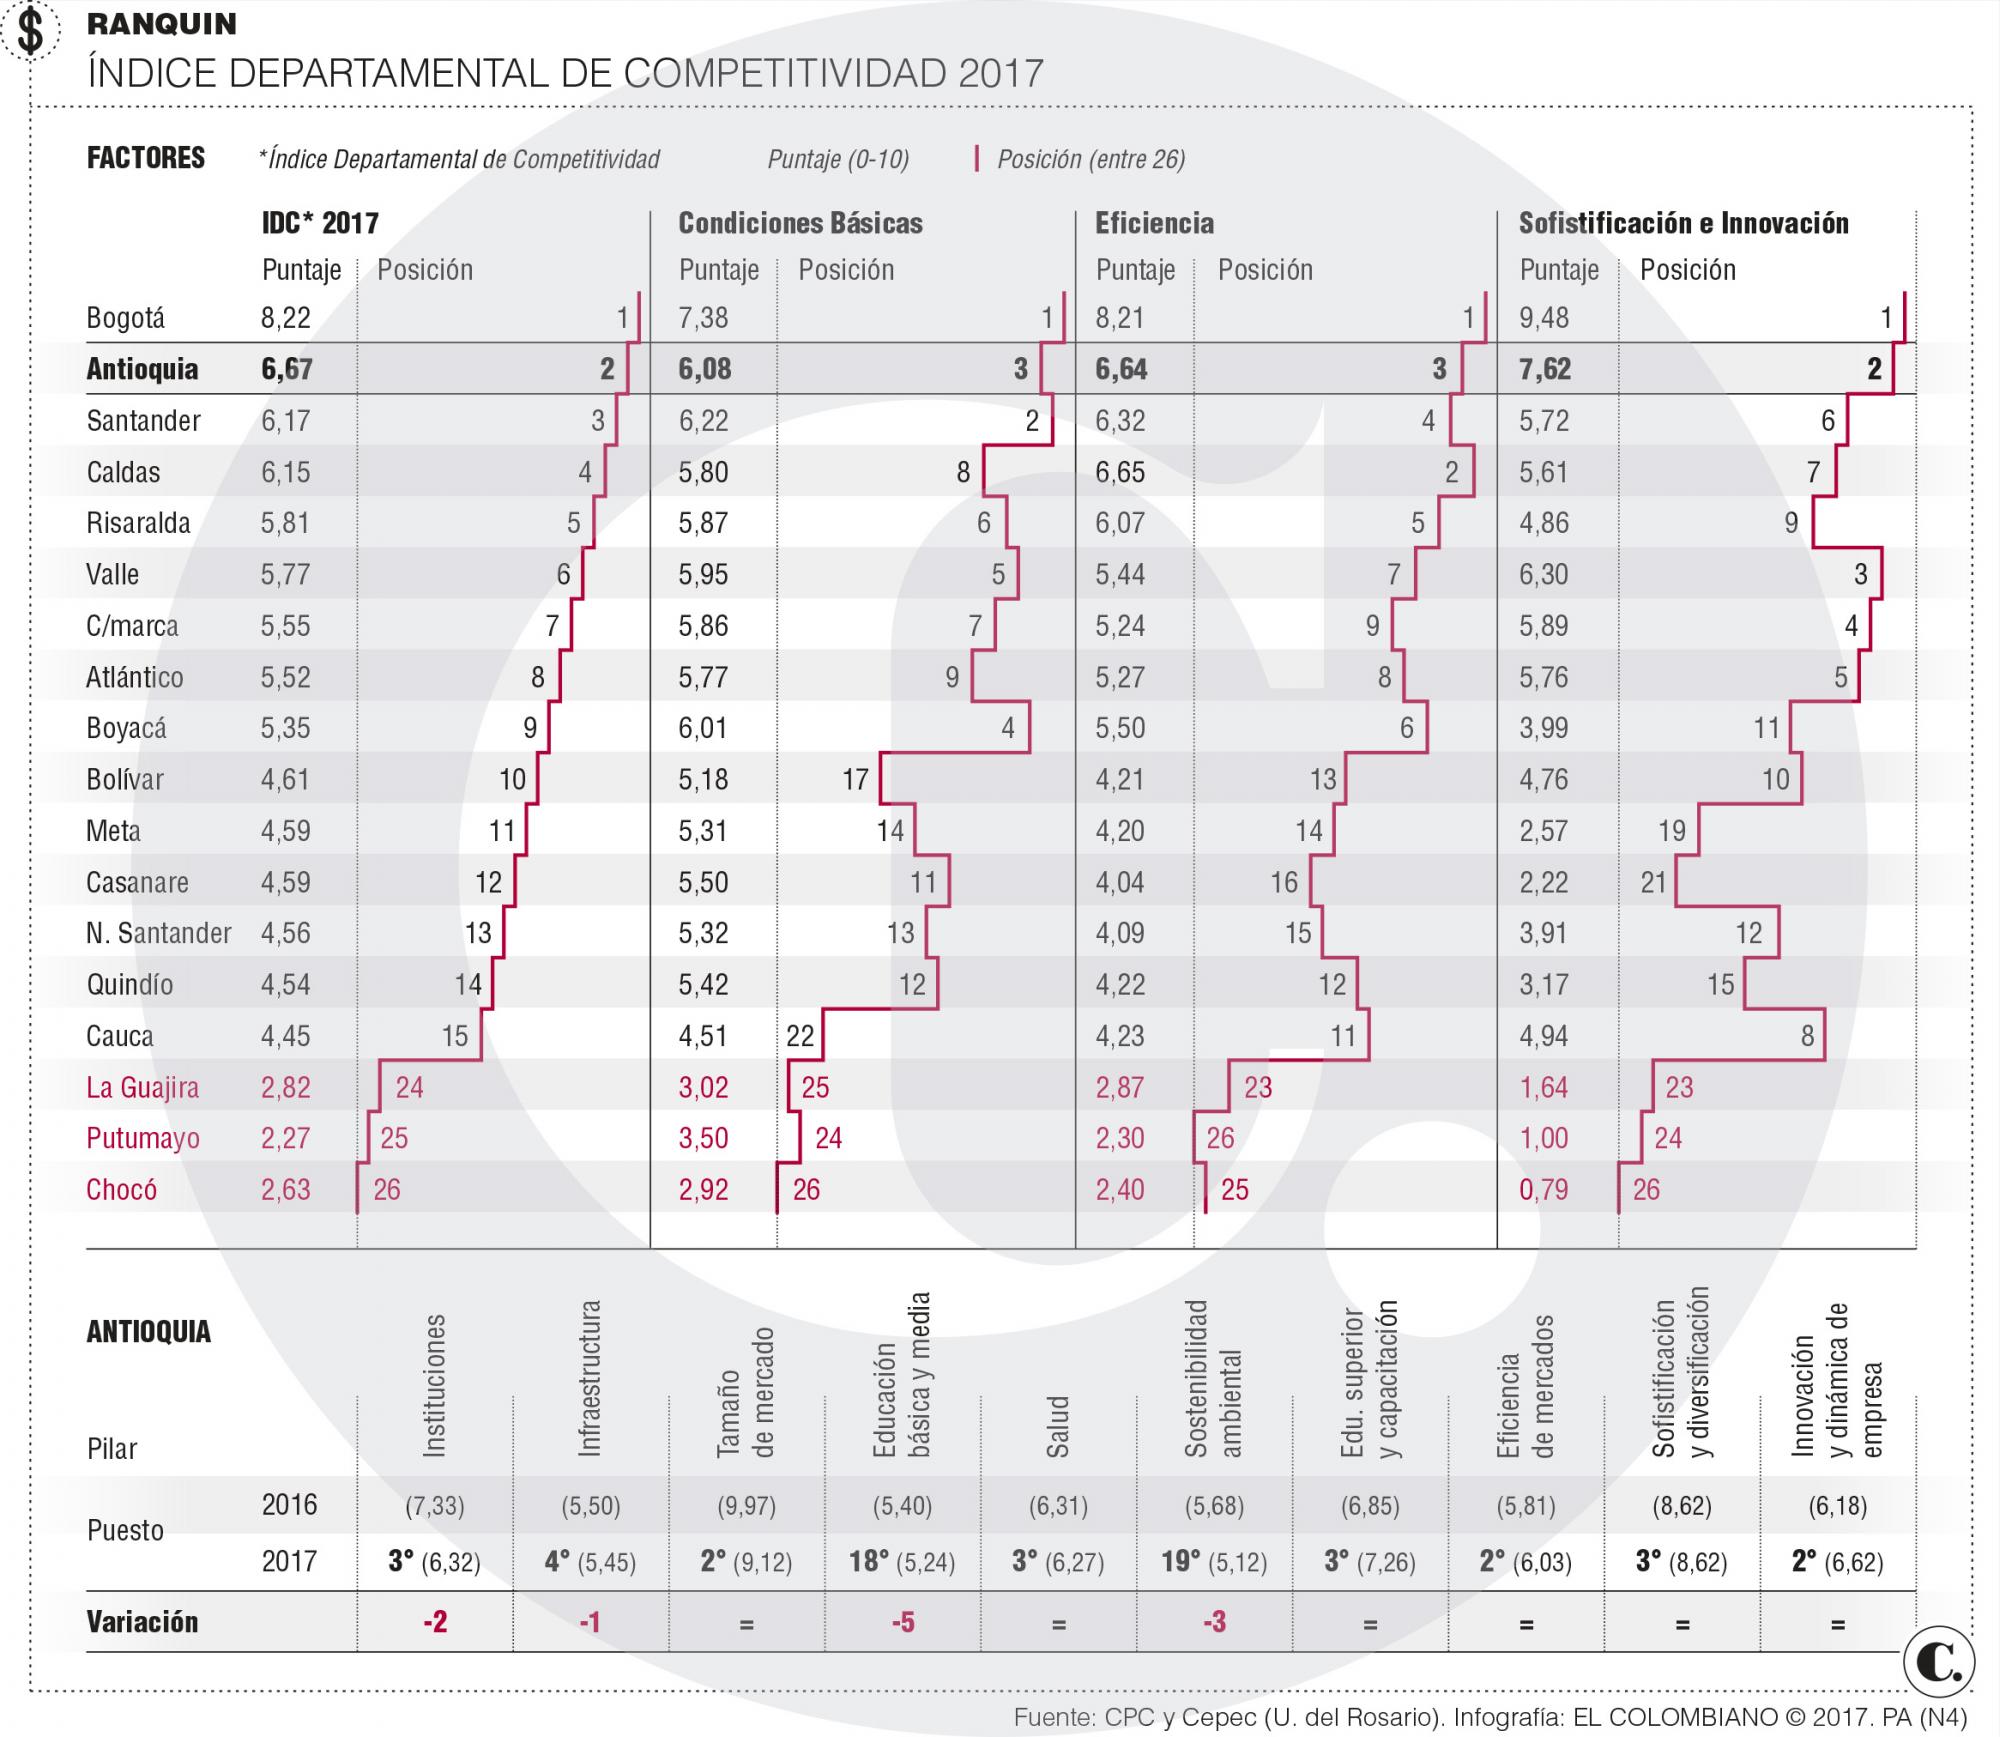 Tareas de Antioquia en índice de competitividad 